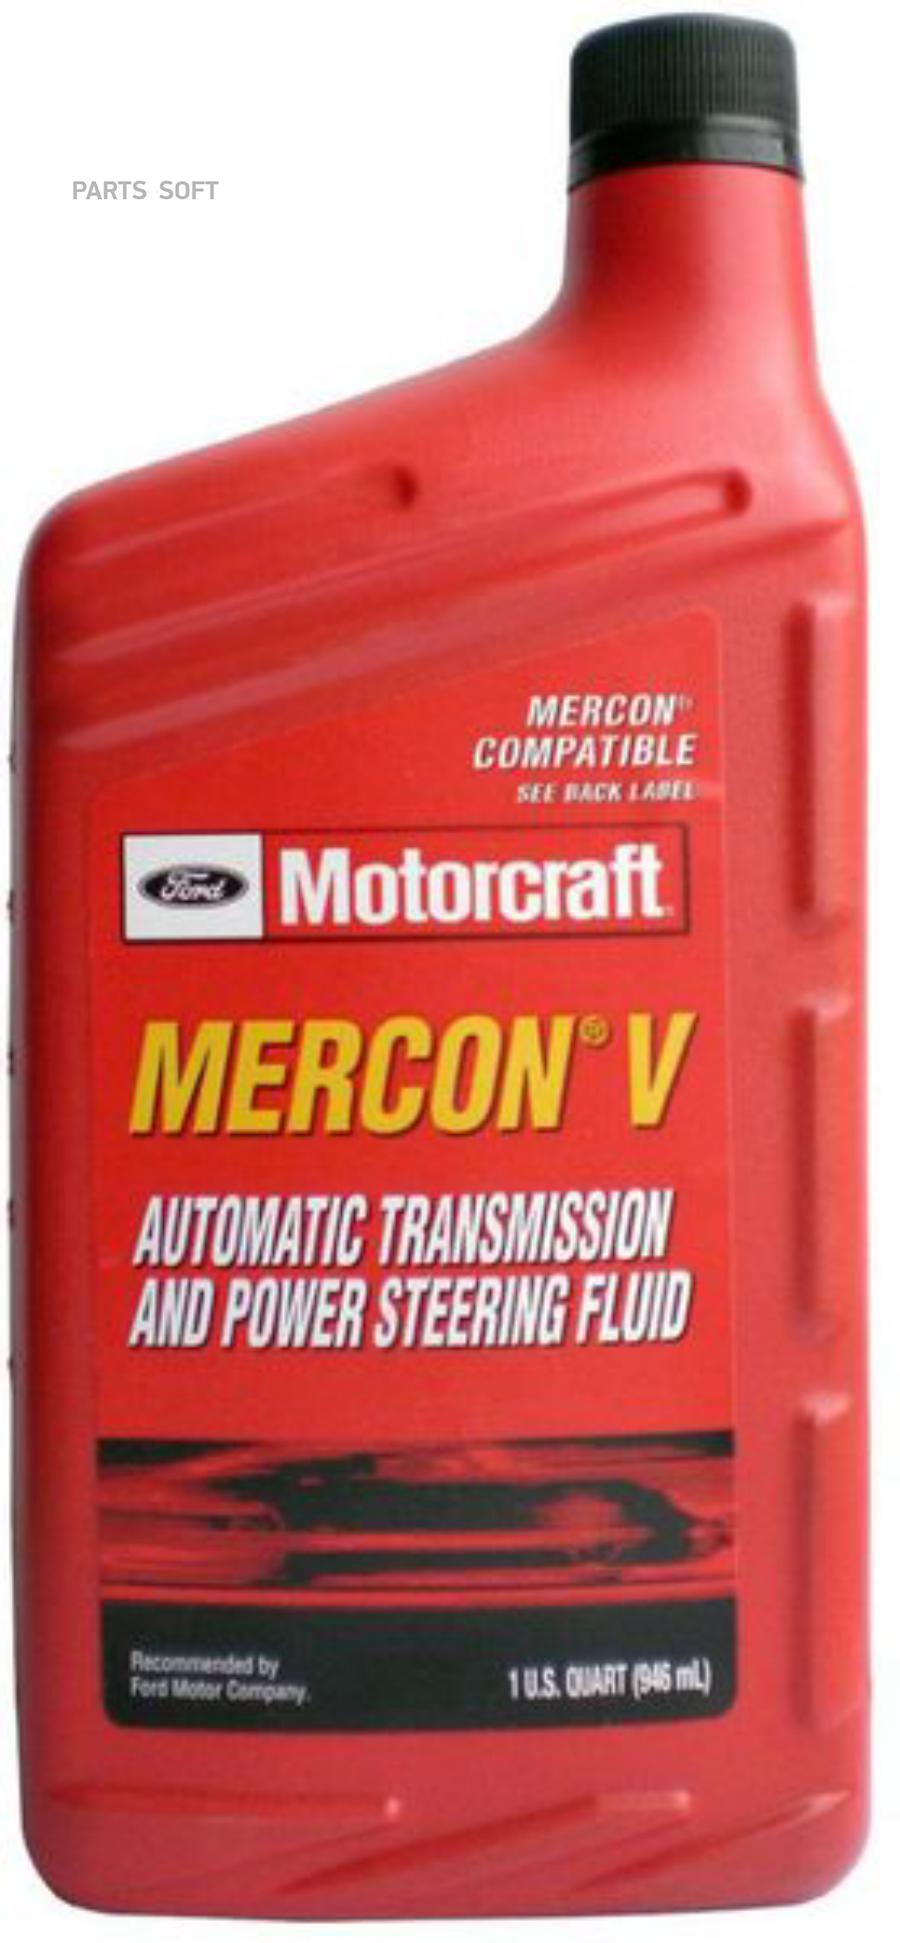 Xt5qmc_жидкость Гидравлическая (0.946l) !Us Motorcraft Merconford Atf Mercon V FORD арт. X